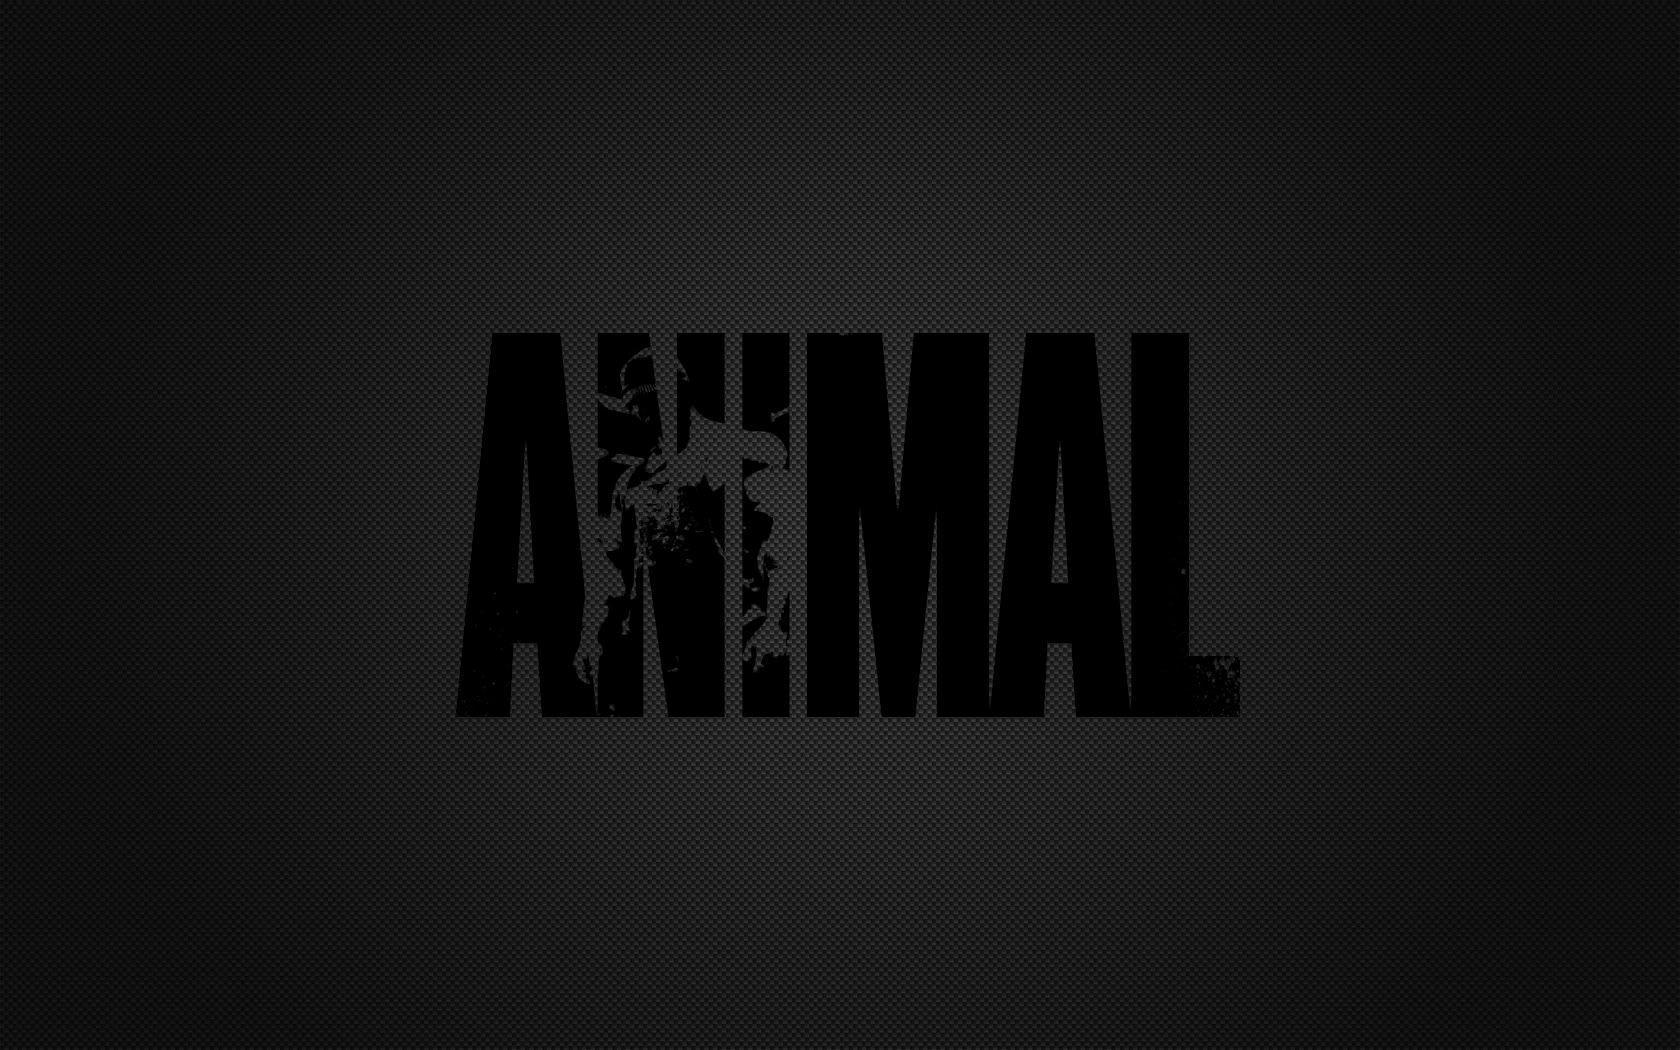 Animal Pak Wallpaper.com Forums. Wallpaper